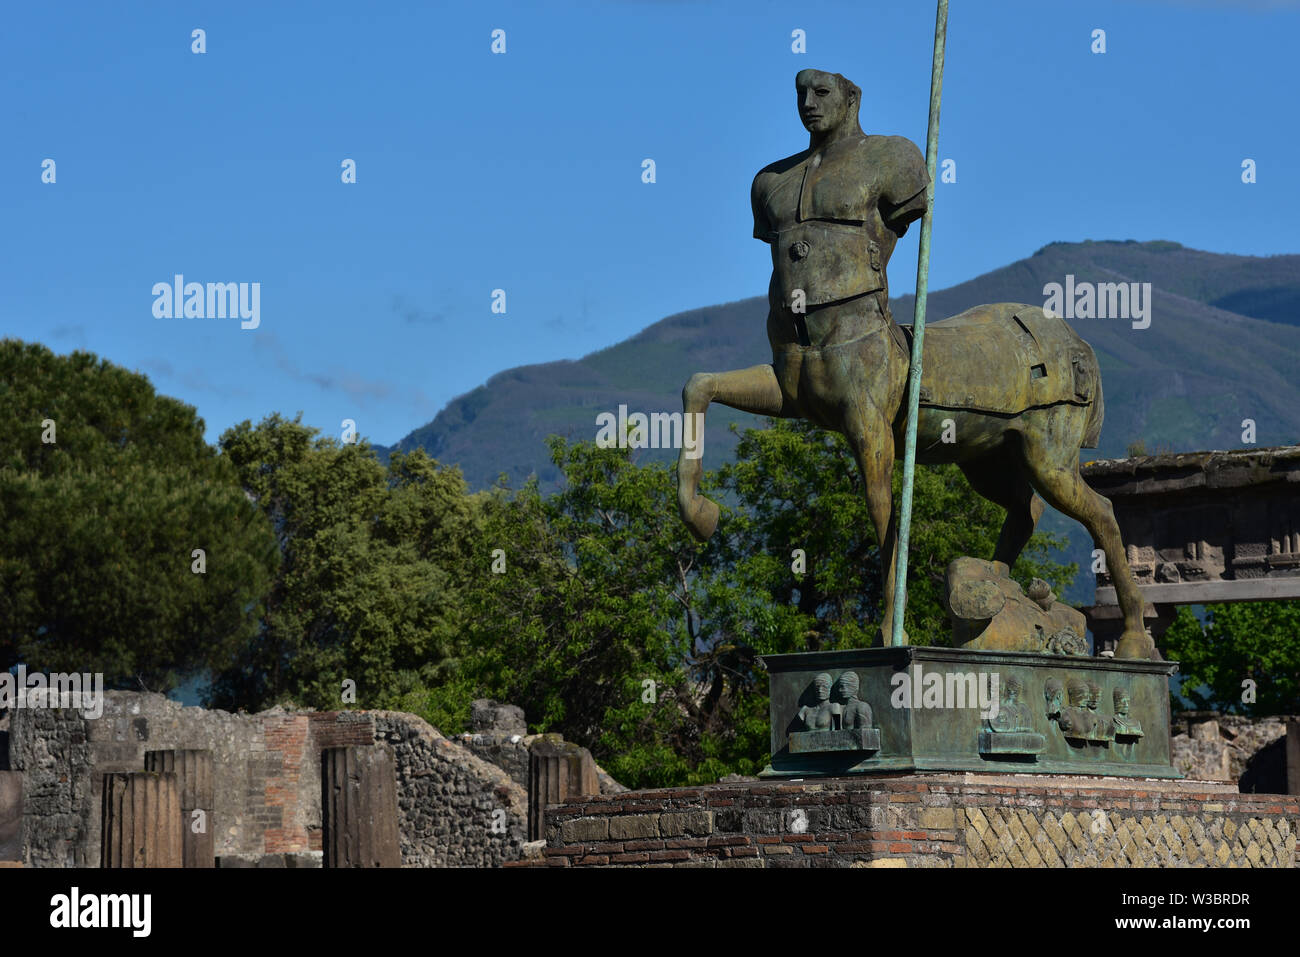 Bronze art sculpture 'Centauro' by Polish artist Igor Mitorja in the Forum, Pompeii, Italy, Europe. Stock Photo